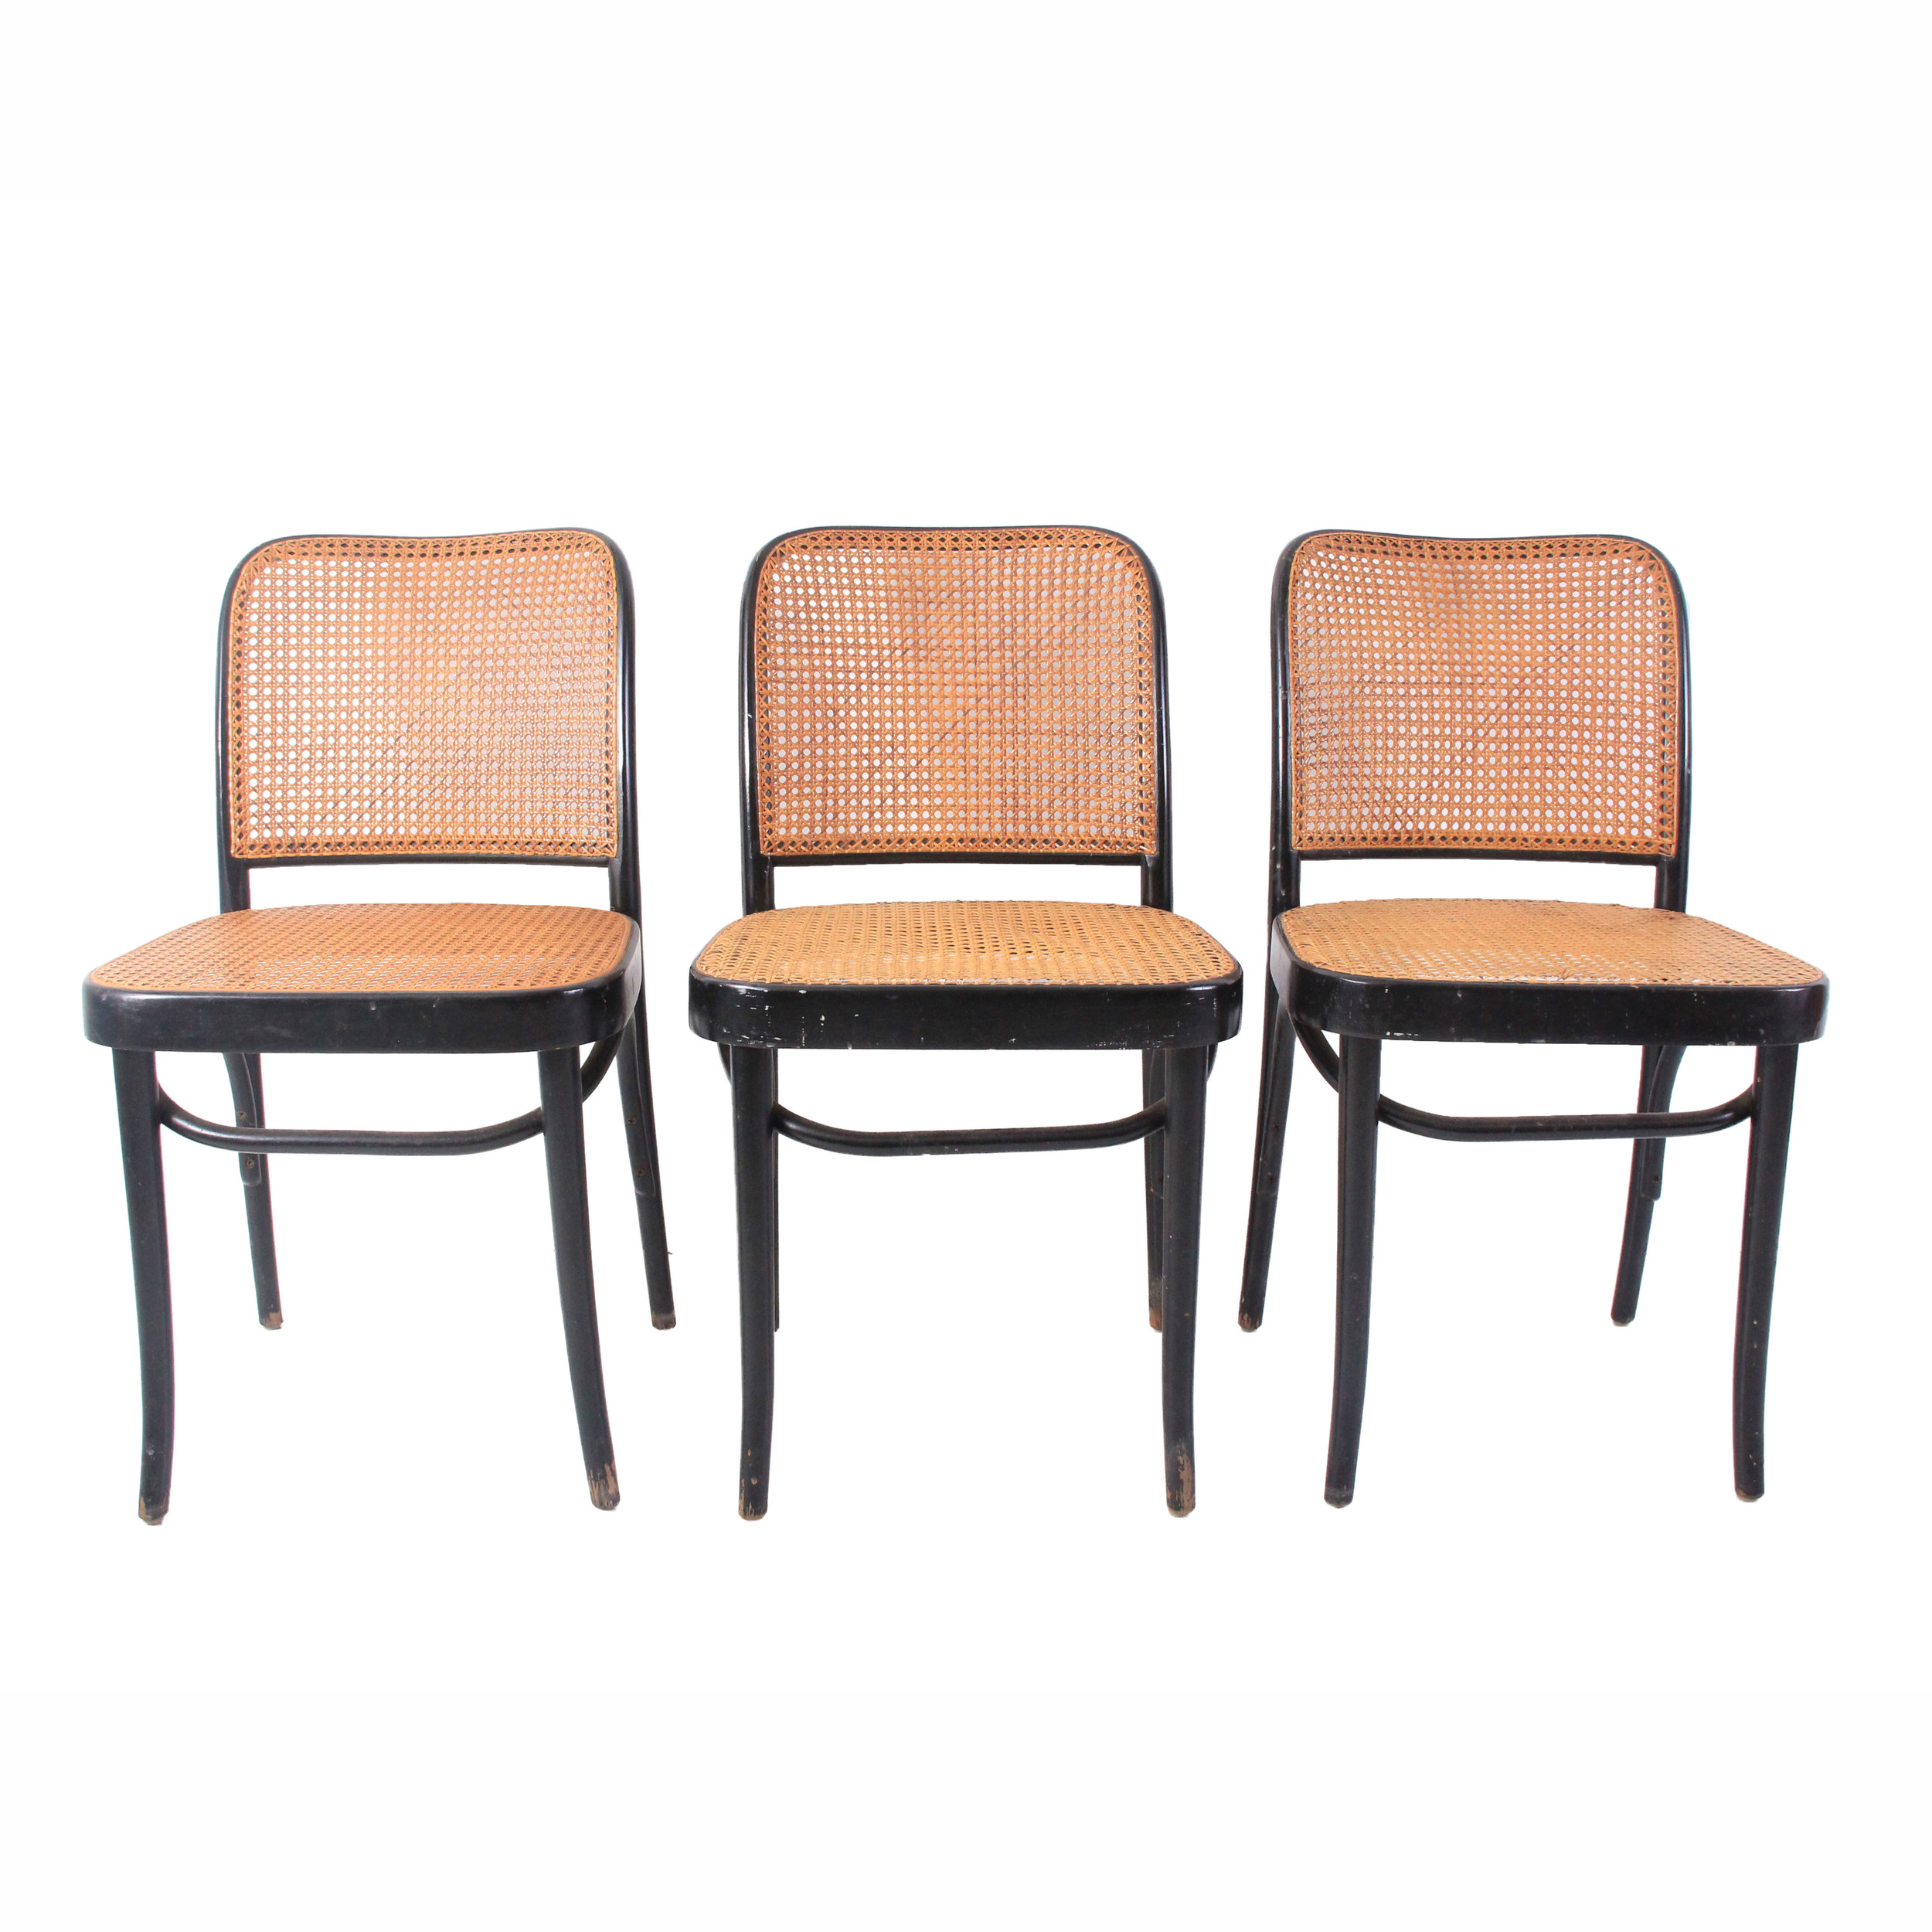 Set of 3 Vintage Black Bentwood Chairs